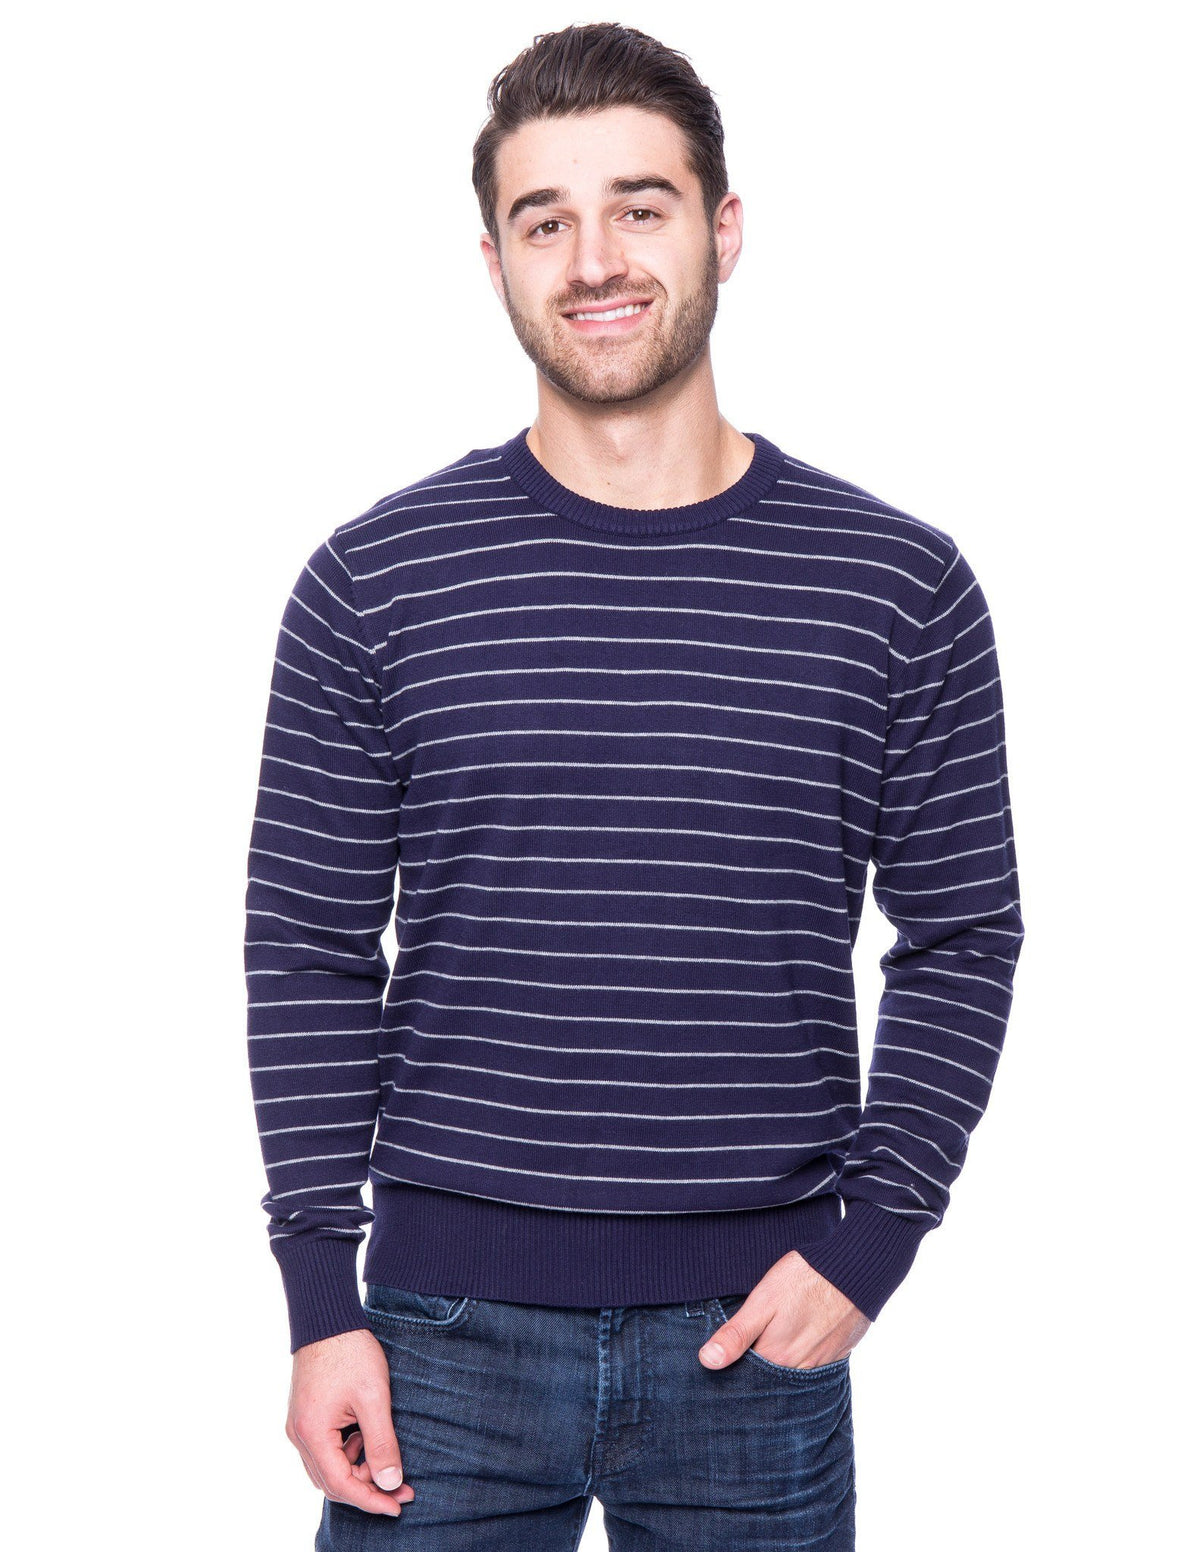 Men's 100% Cotton Crew Neck Sweater - Stripes Navy/Heather Grey